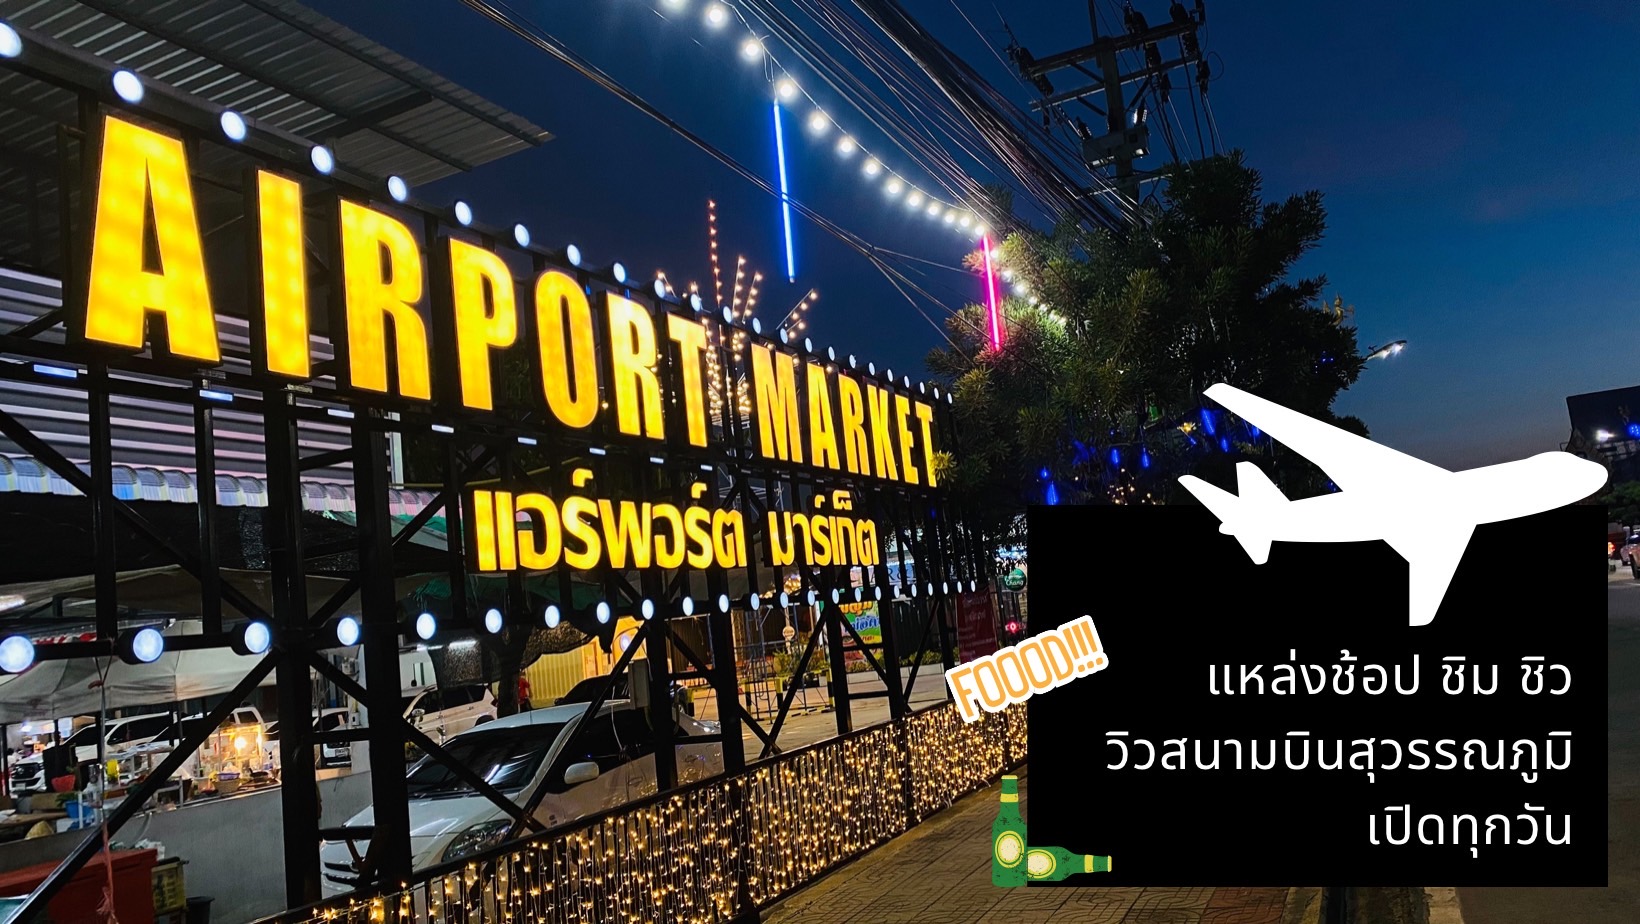 Airport Market (แอร์พอร์ตมาร์เก็ต) : Samut Prakan (สมุทรปราการ)